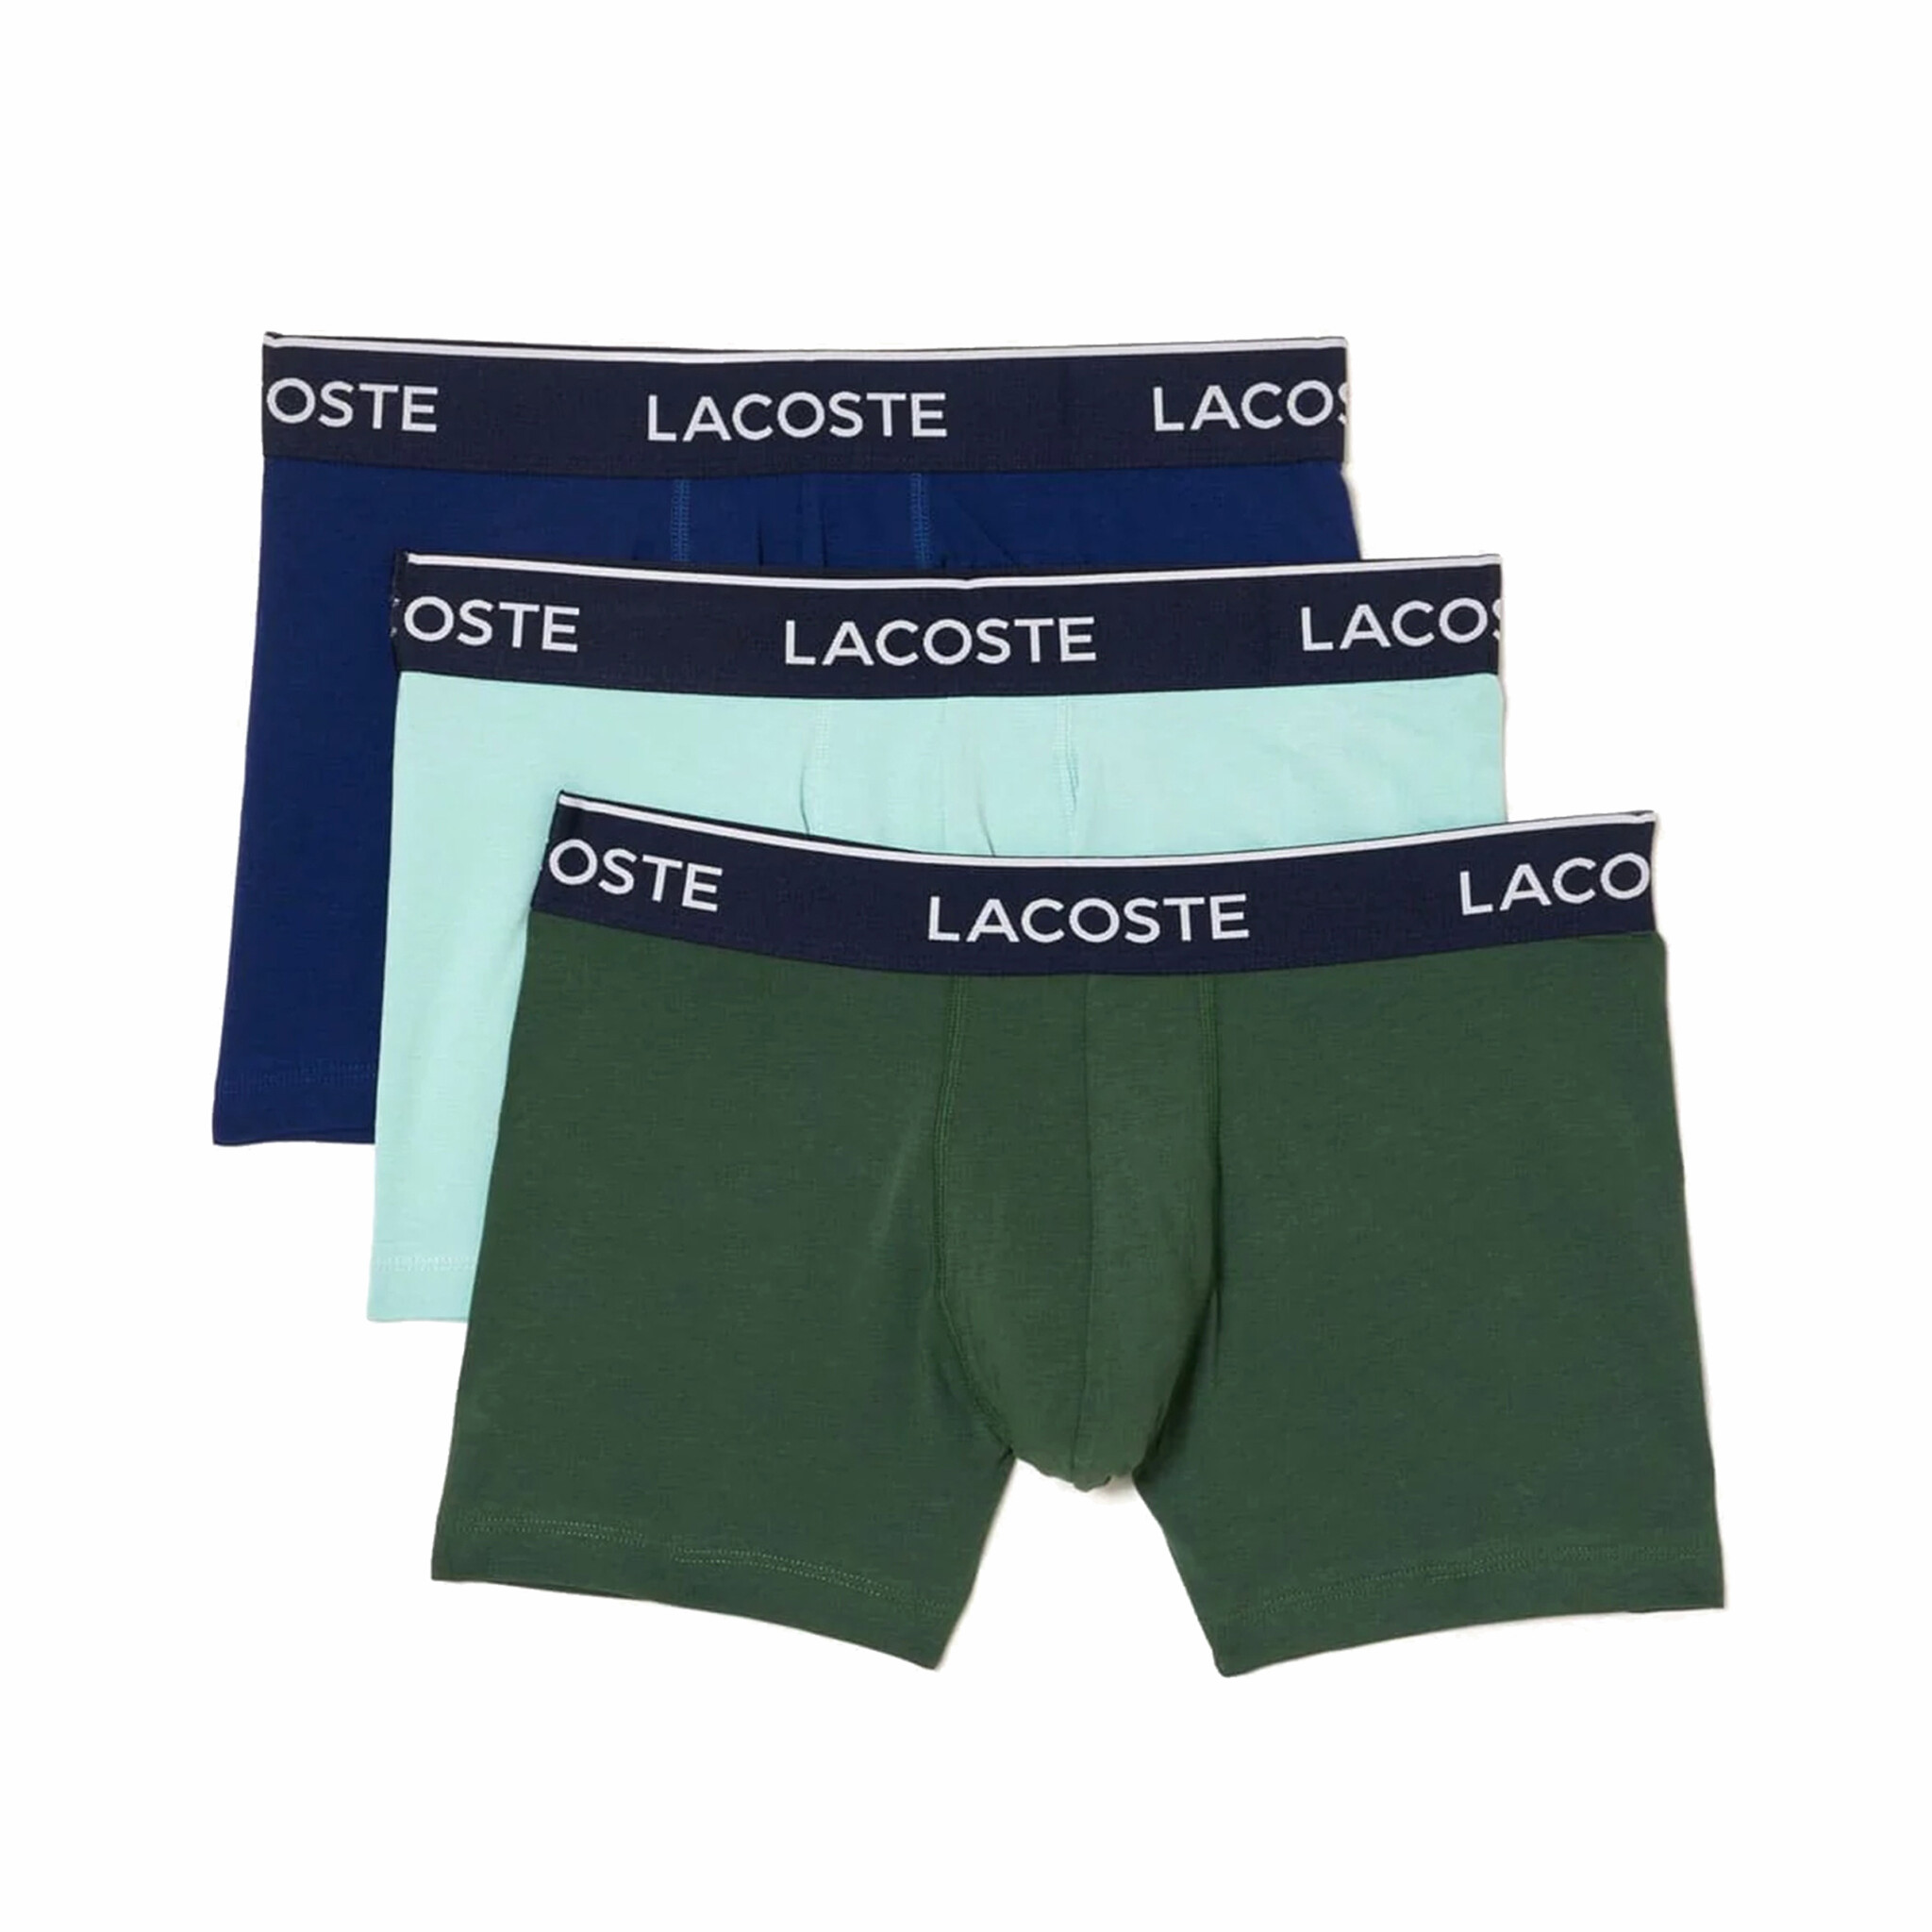 Lacoste Lacoste Classic Boxershorts Heren Groen Blauw Trunks 3 Pack